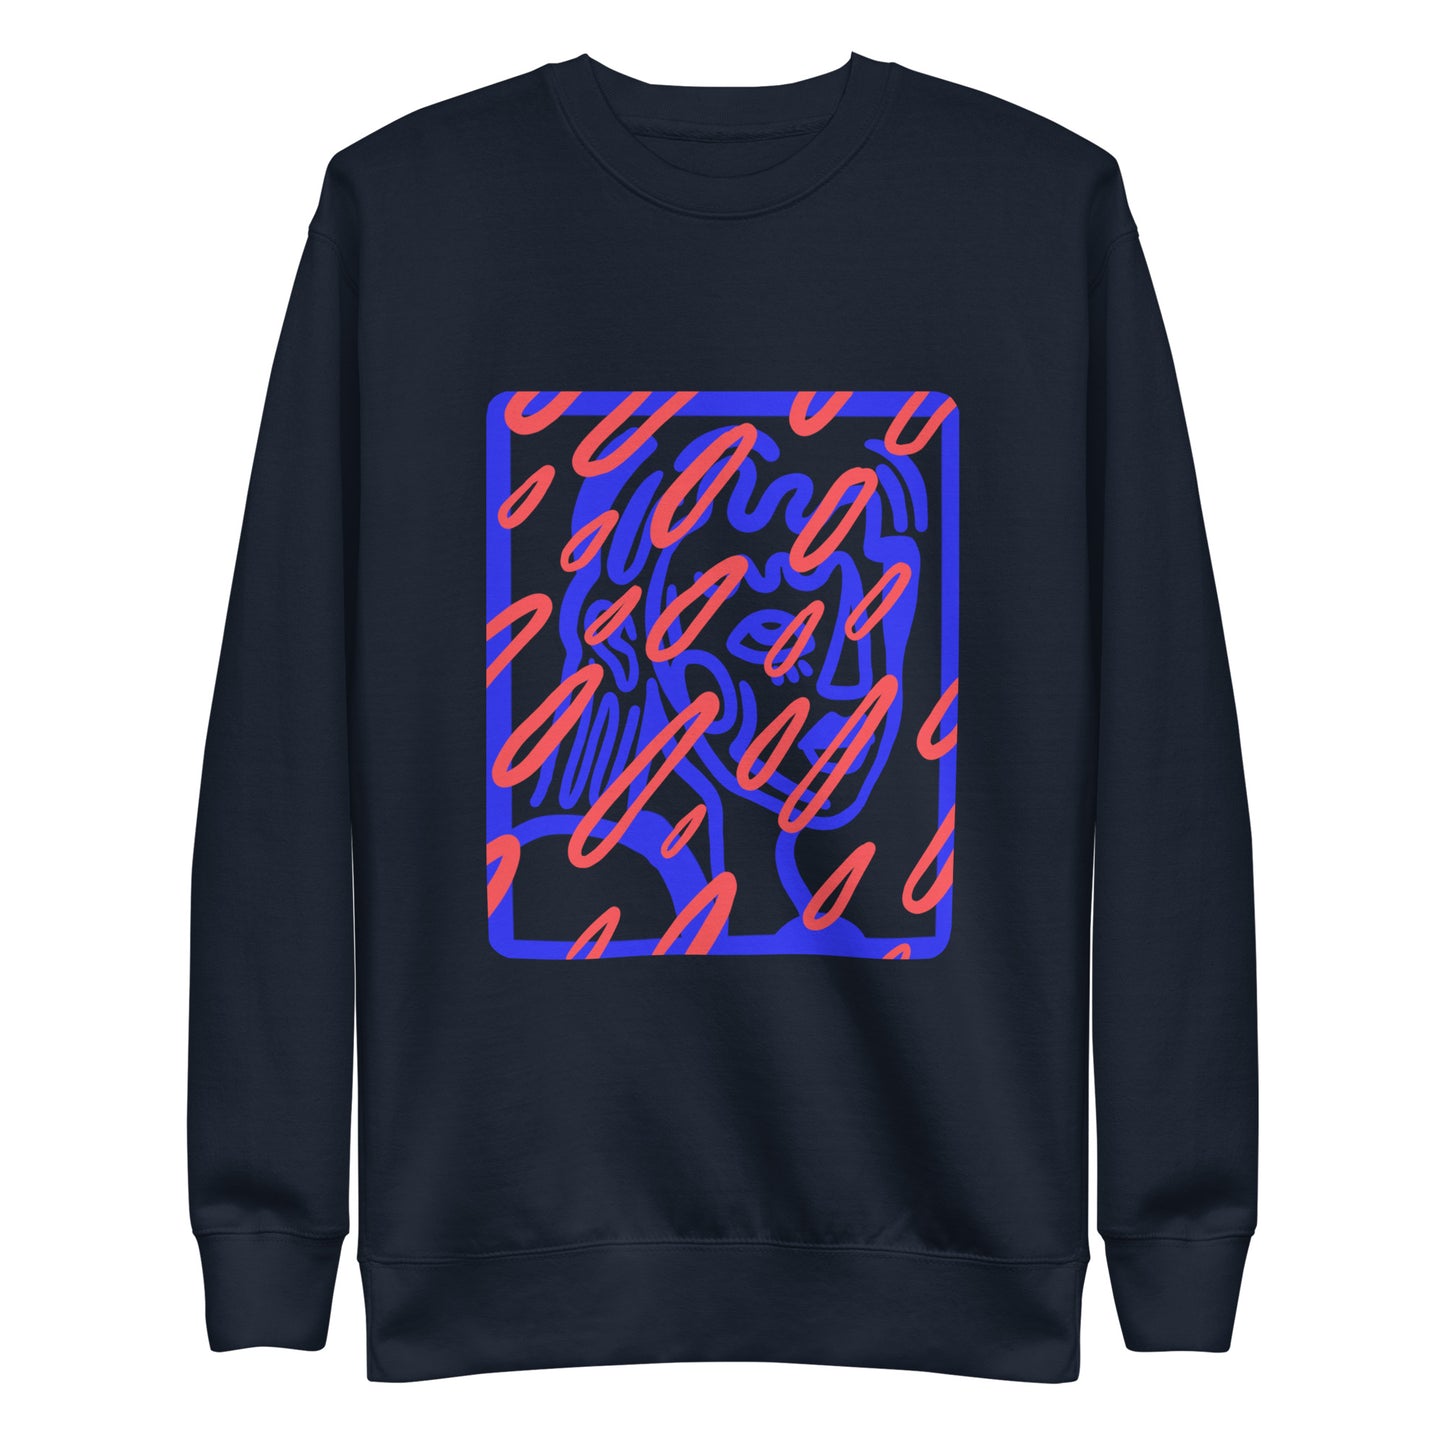 'Rainy Day' Sweater